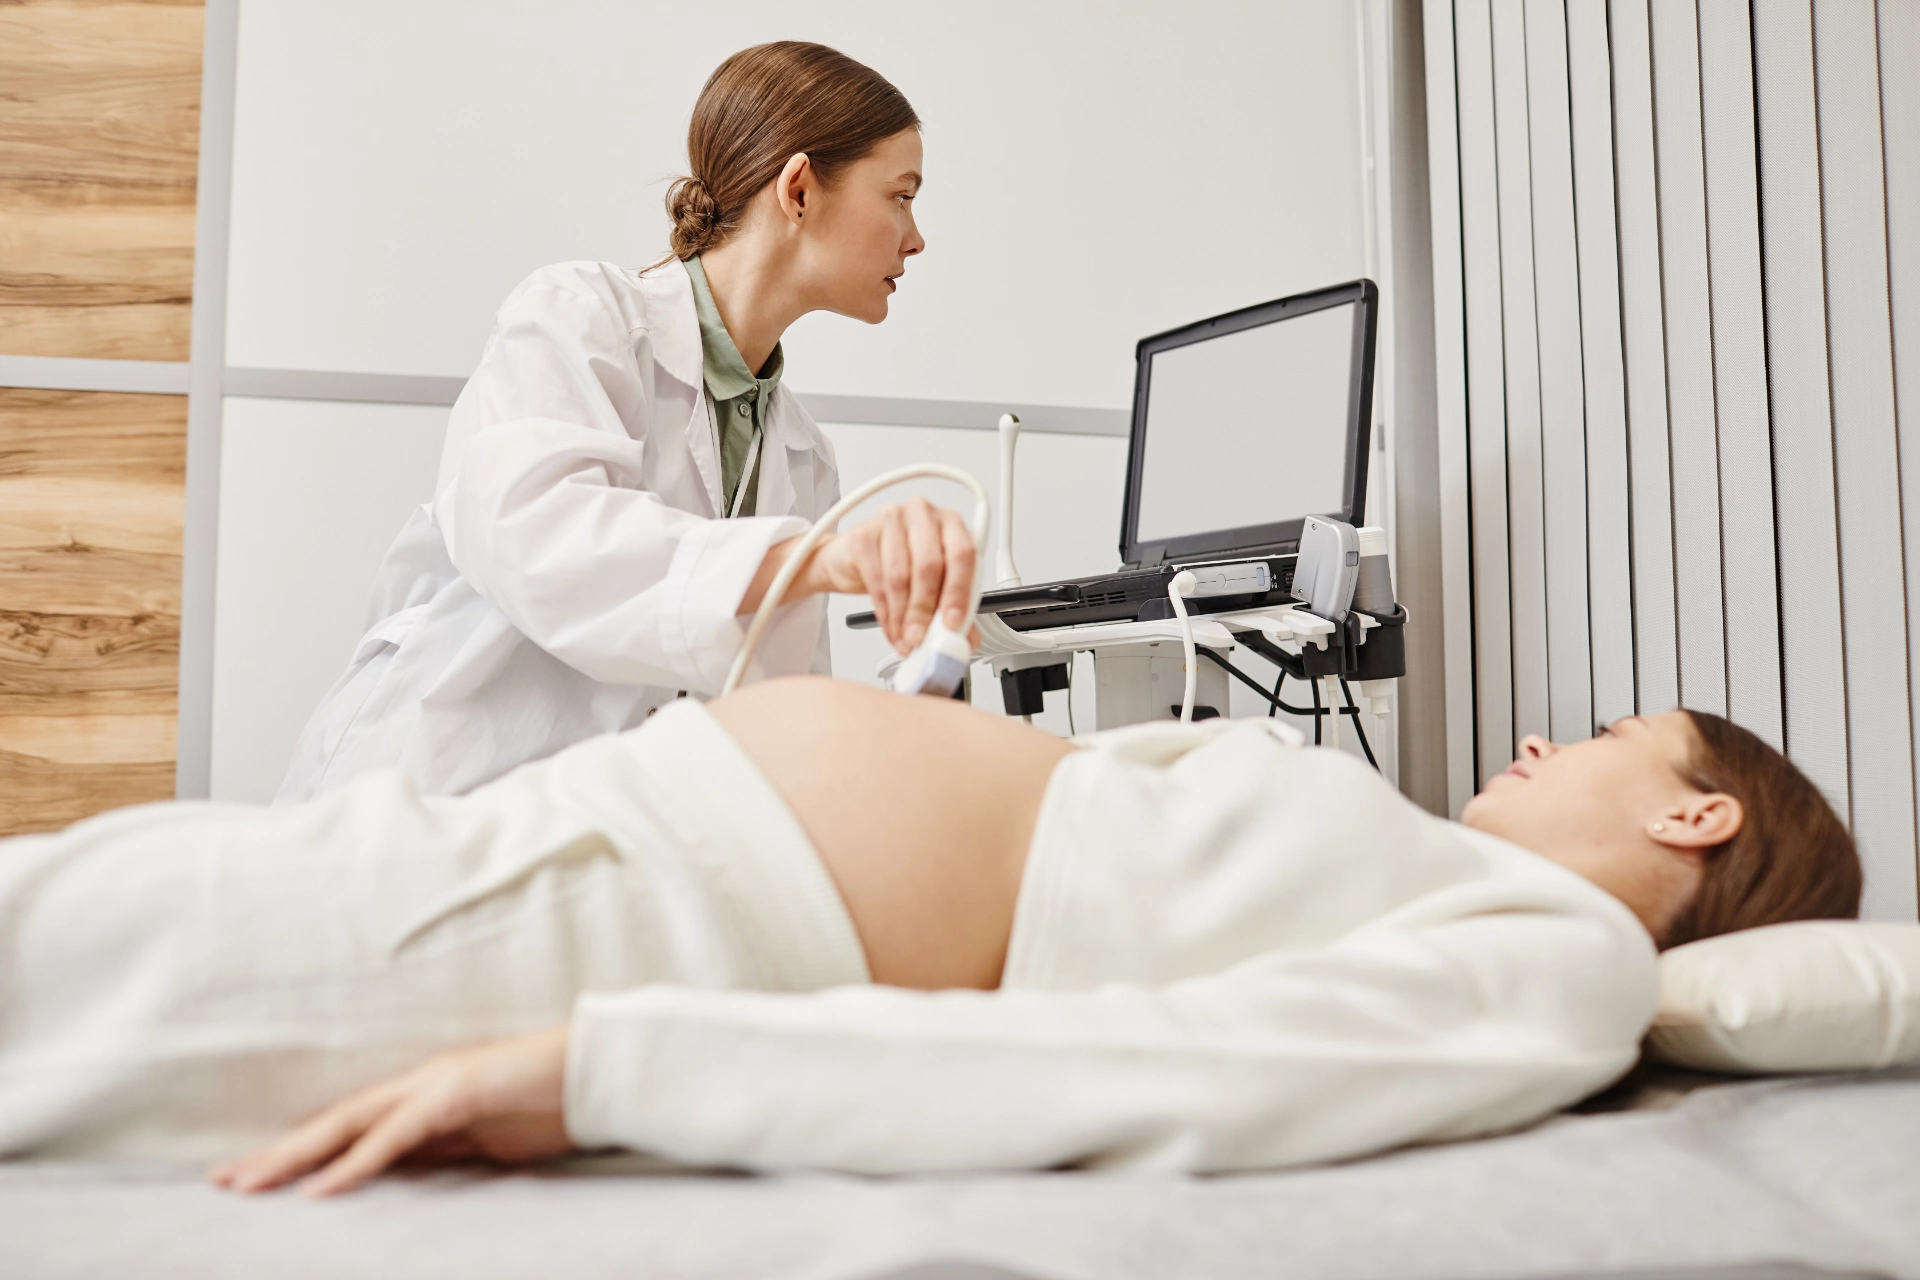 pregnancy check up 2022 03 31 10 11 57 utc